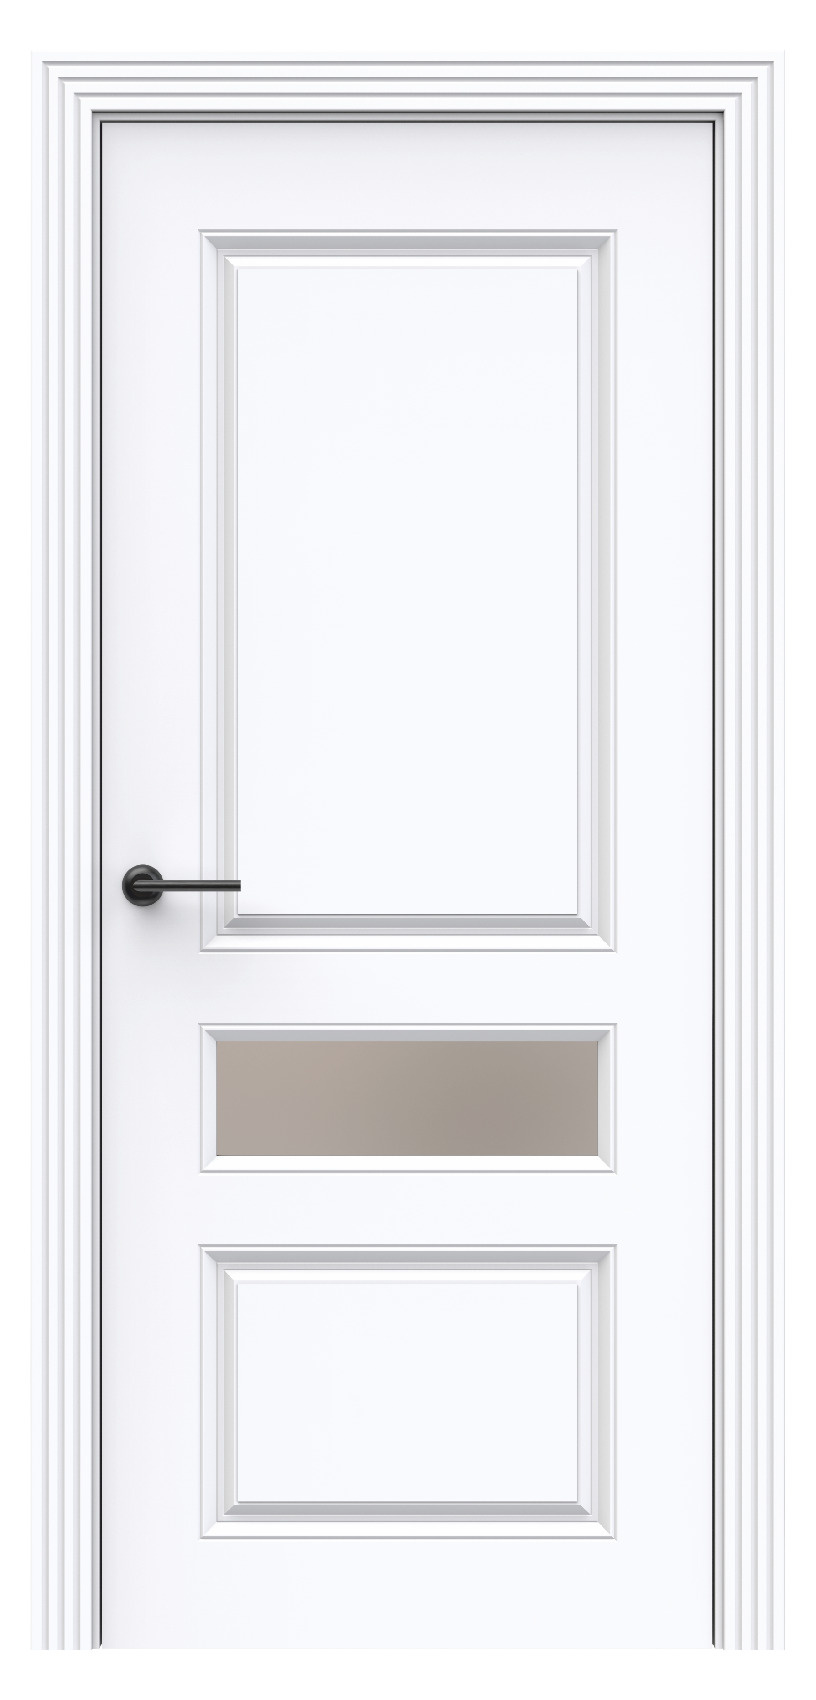 Questdoors Межкомнатная дверь QE6, арт. 17943 - фото №1